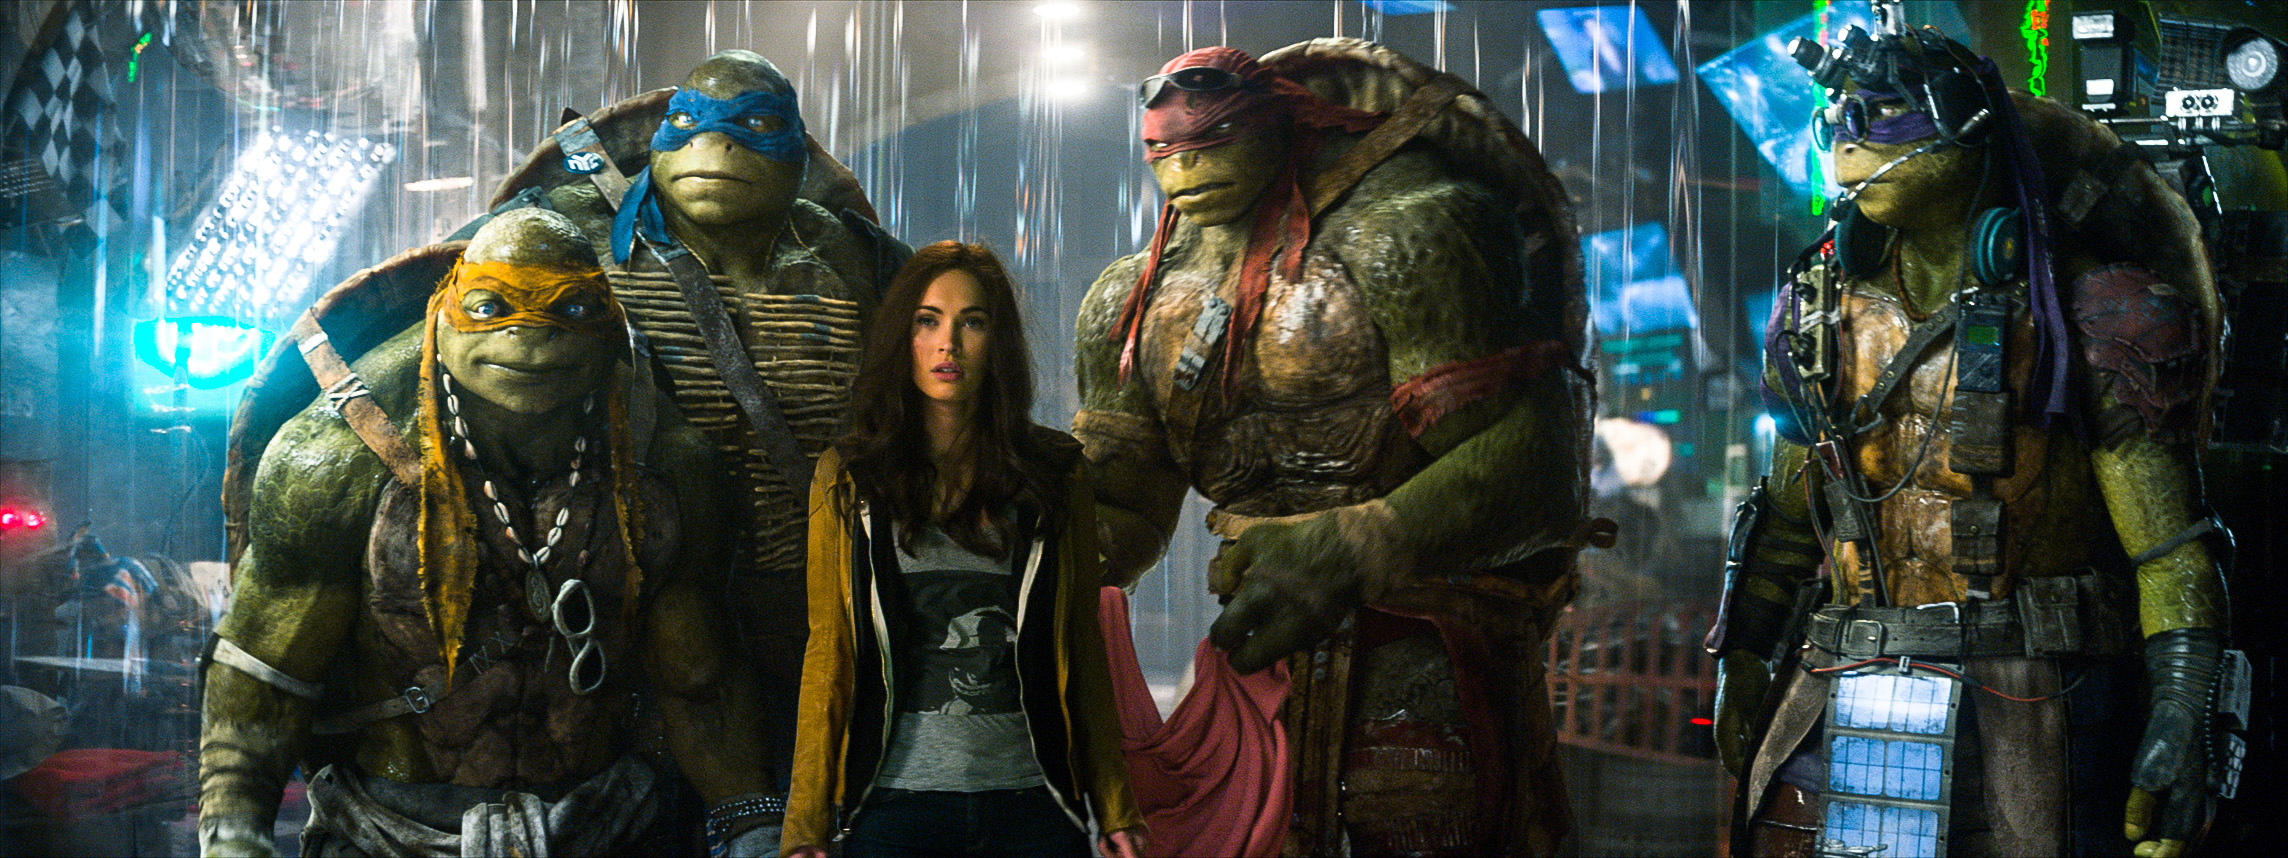 Megan Fox stars as April O'Neil in <i>Teenage Mutant Ninja Turtles</i> alongside (L-R) Michelangelo, Leonardo, Raphael and Donatello. (Industrial Light & Magic / Paramount)